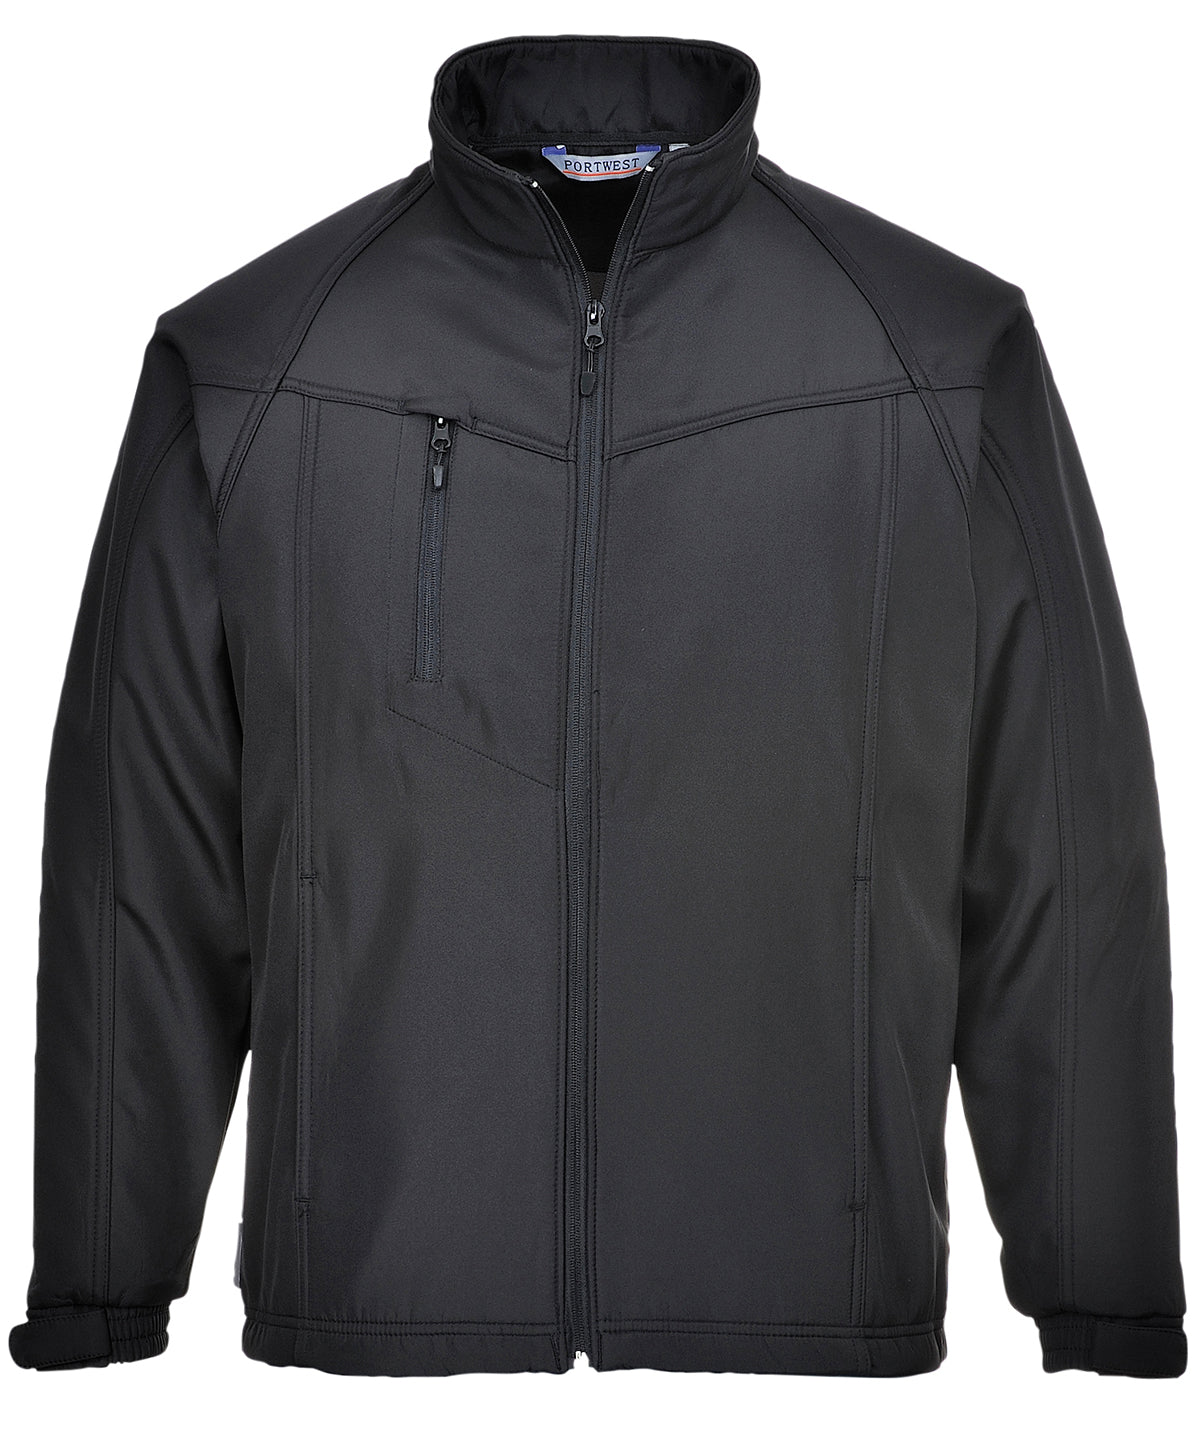 Men's Oregon Softshell Jacket (TK40)